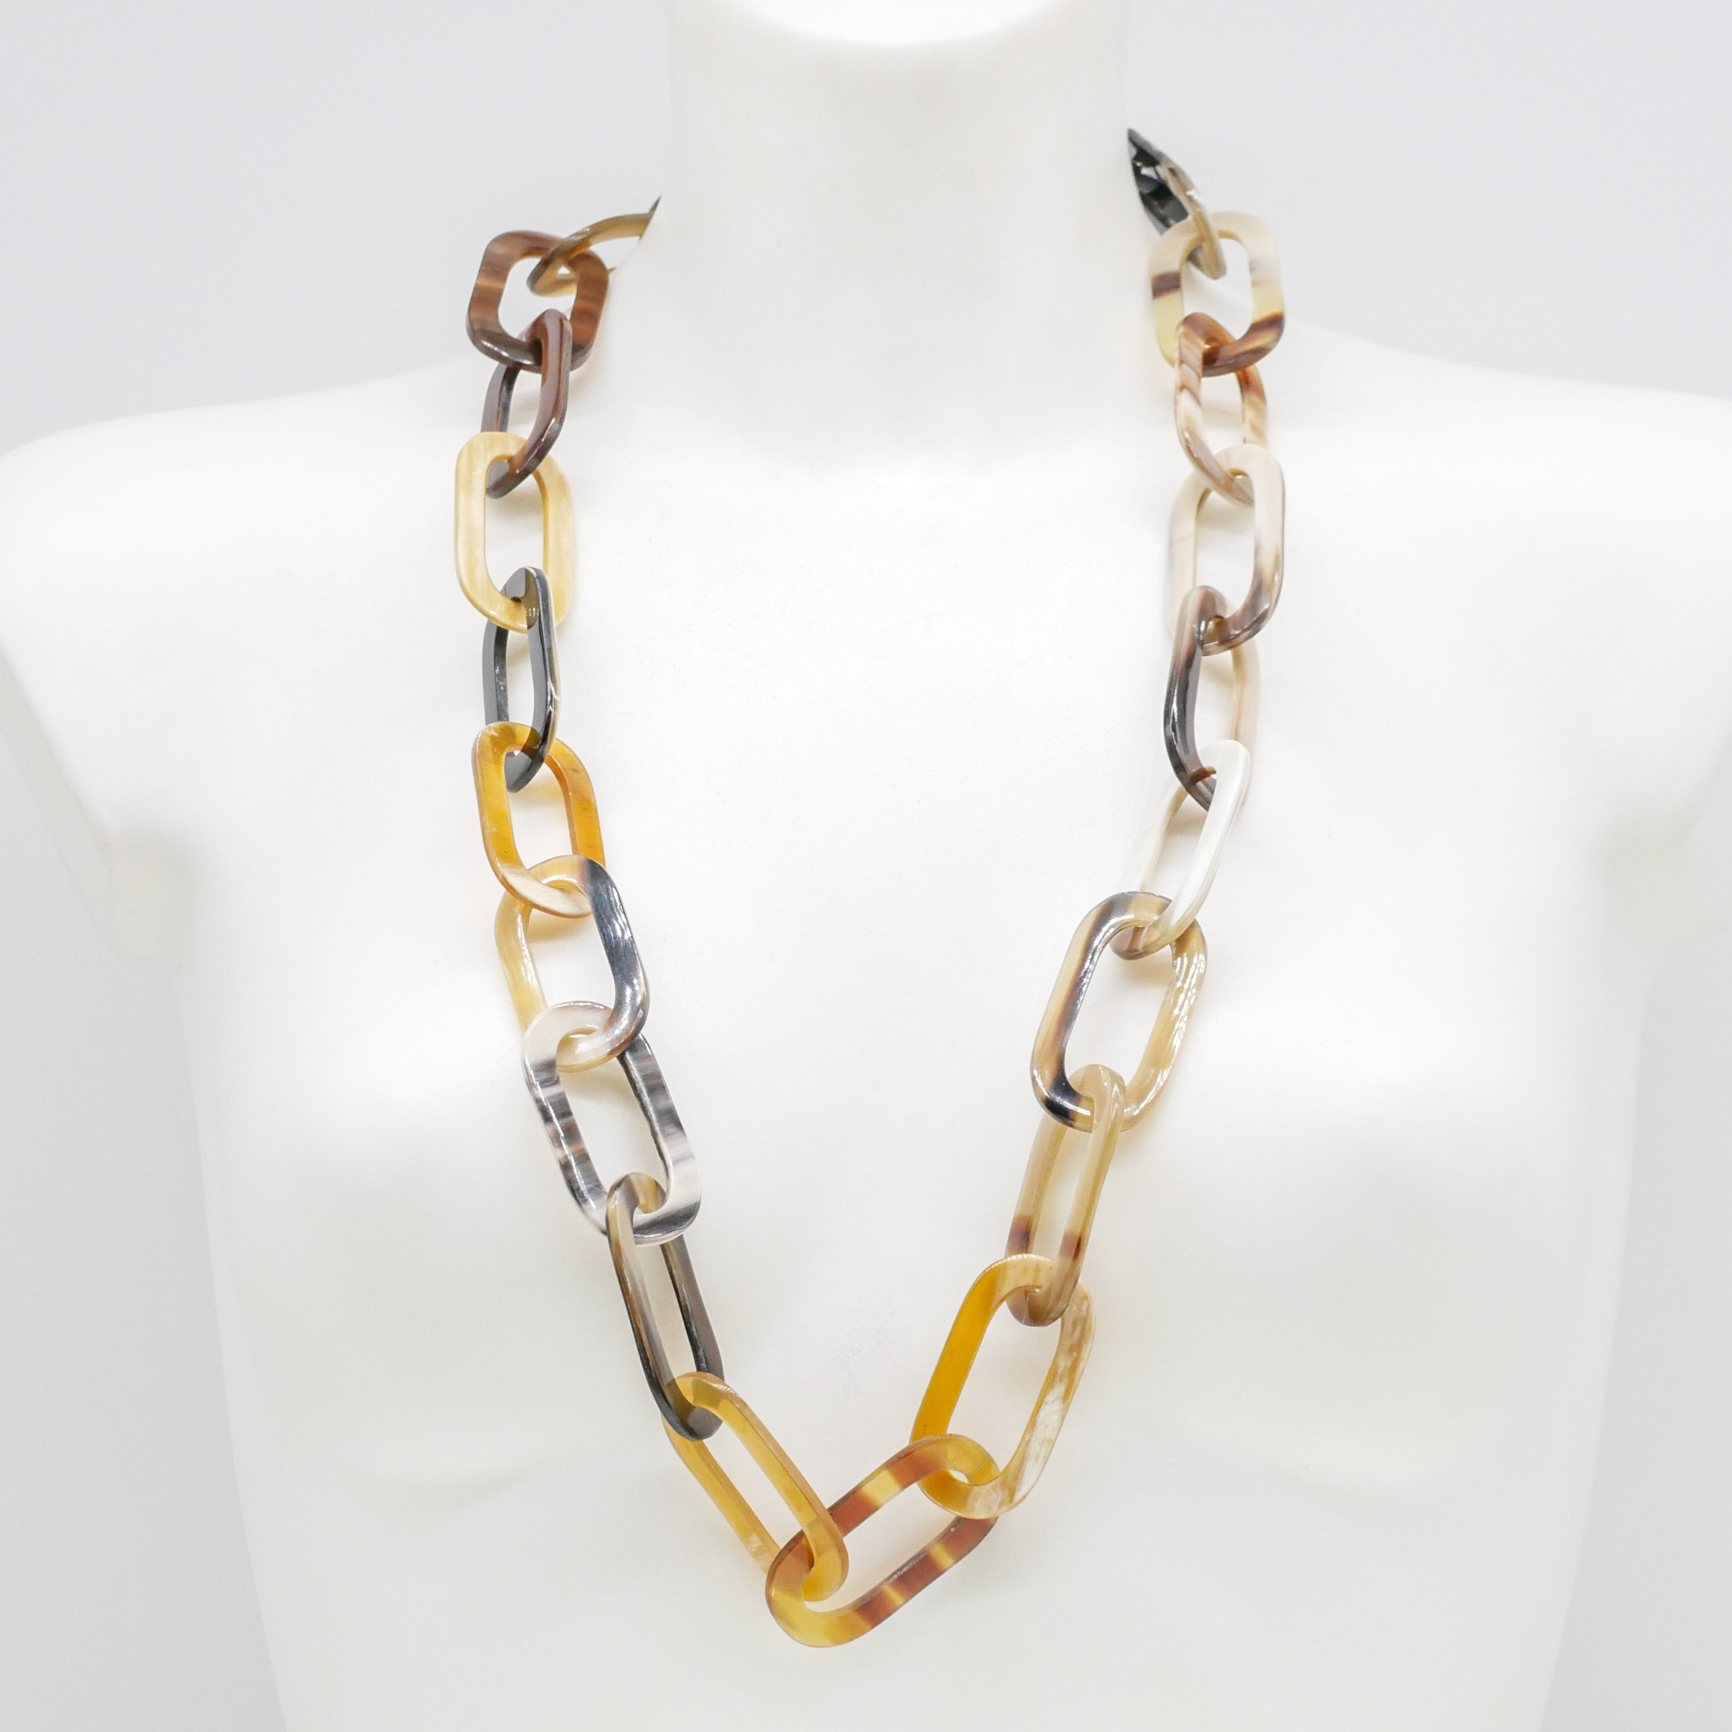 "Art Craft", Horn necklace, long necklace, elongated element, brown african horn 